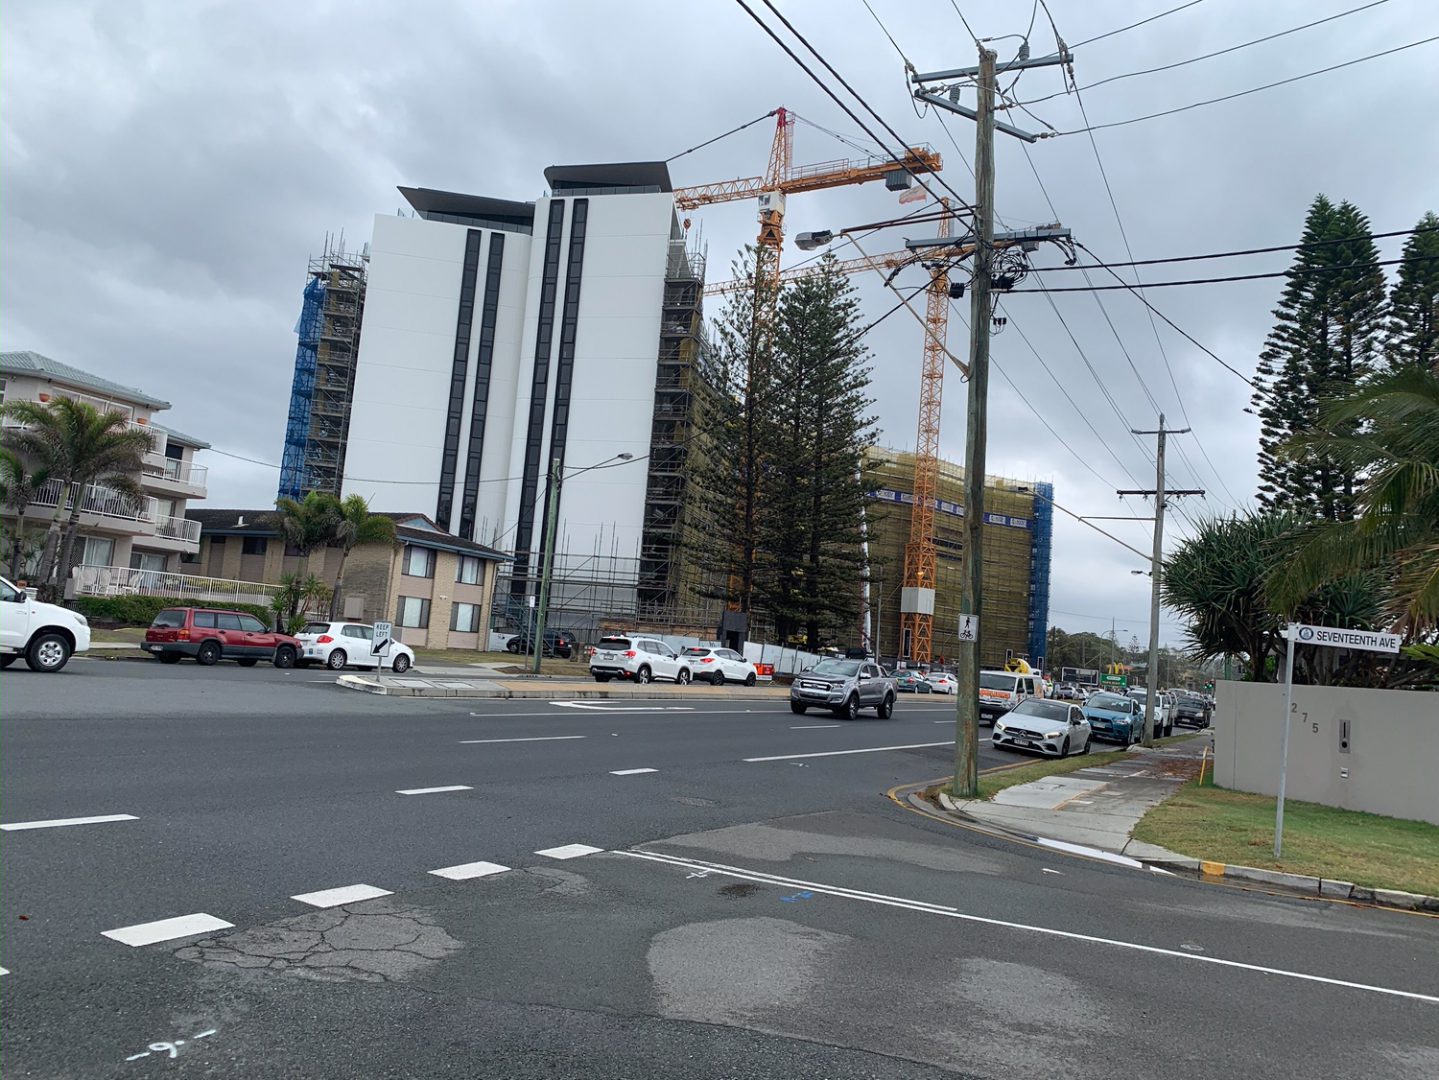 Magnoli Under Construction Dec 2019 (image provided by Project Marketing Australia)